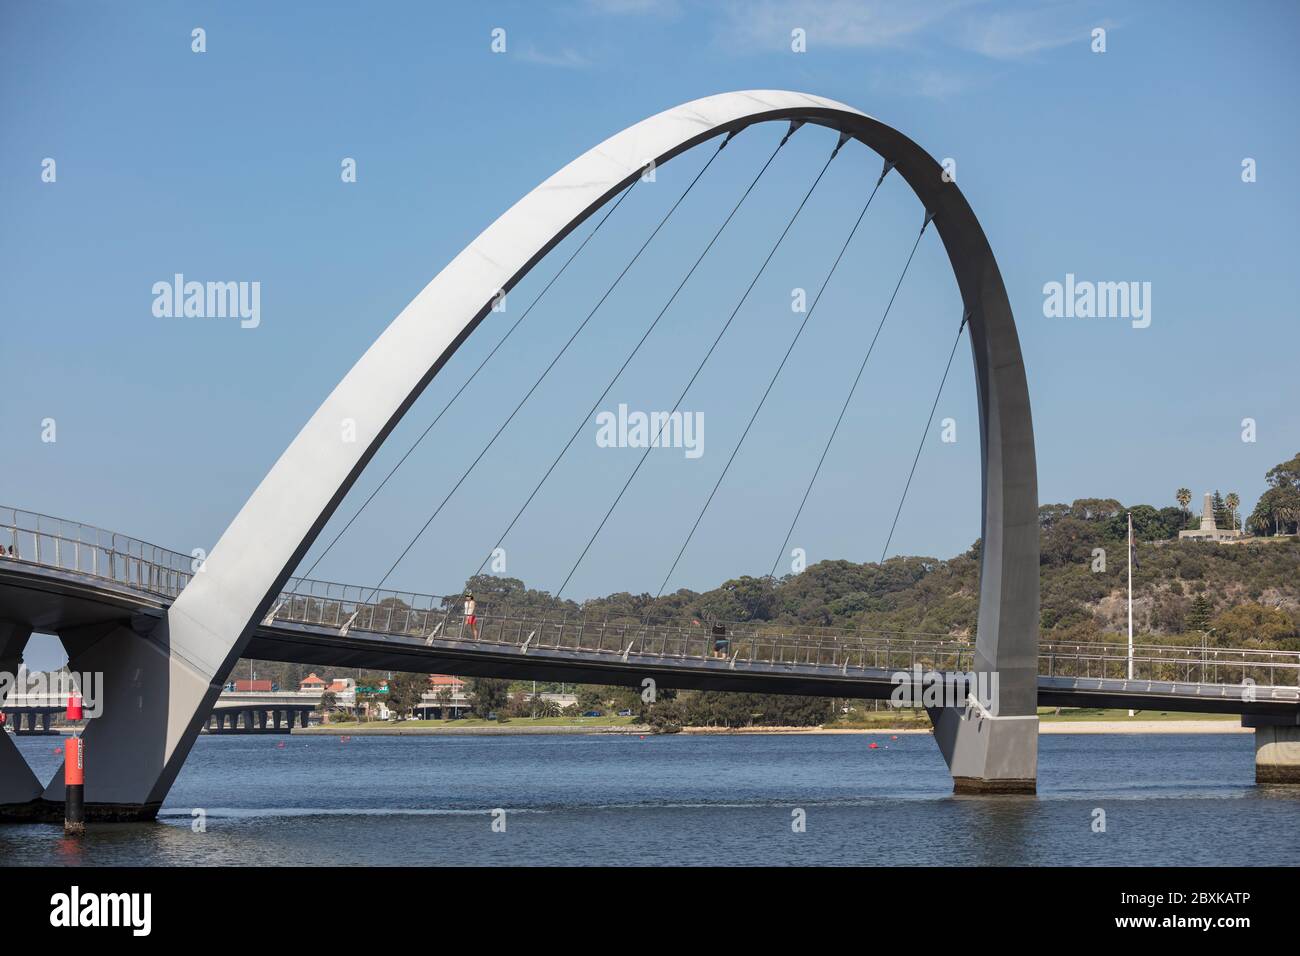 Perth Australia November 5th 2019: The iconic curved pedestrain bridge at Elizabeth Quay in Perth, Western Australia Stock Photo